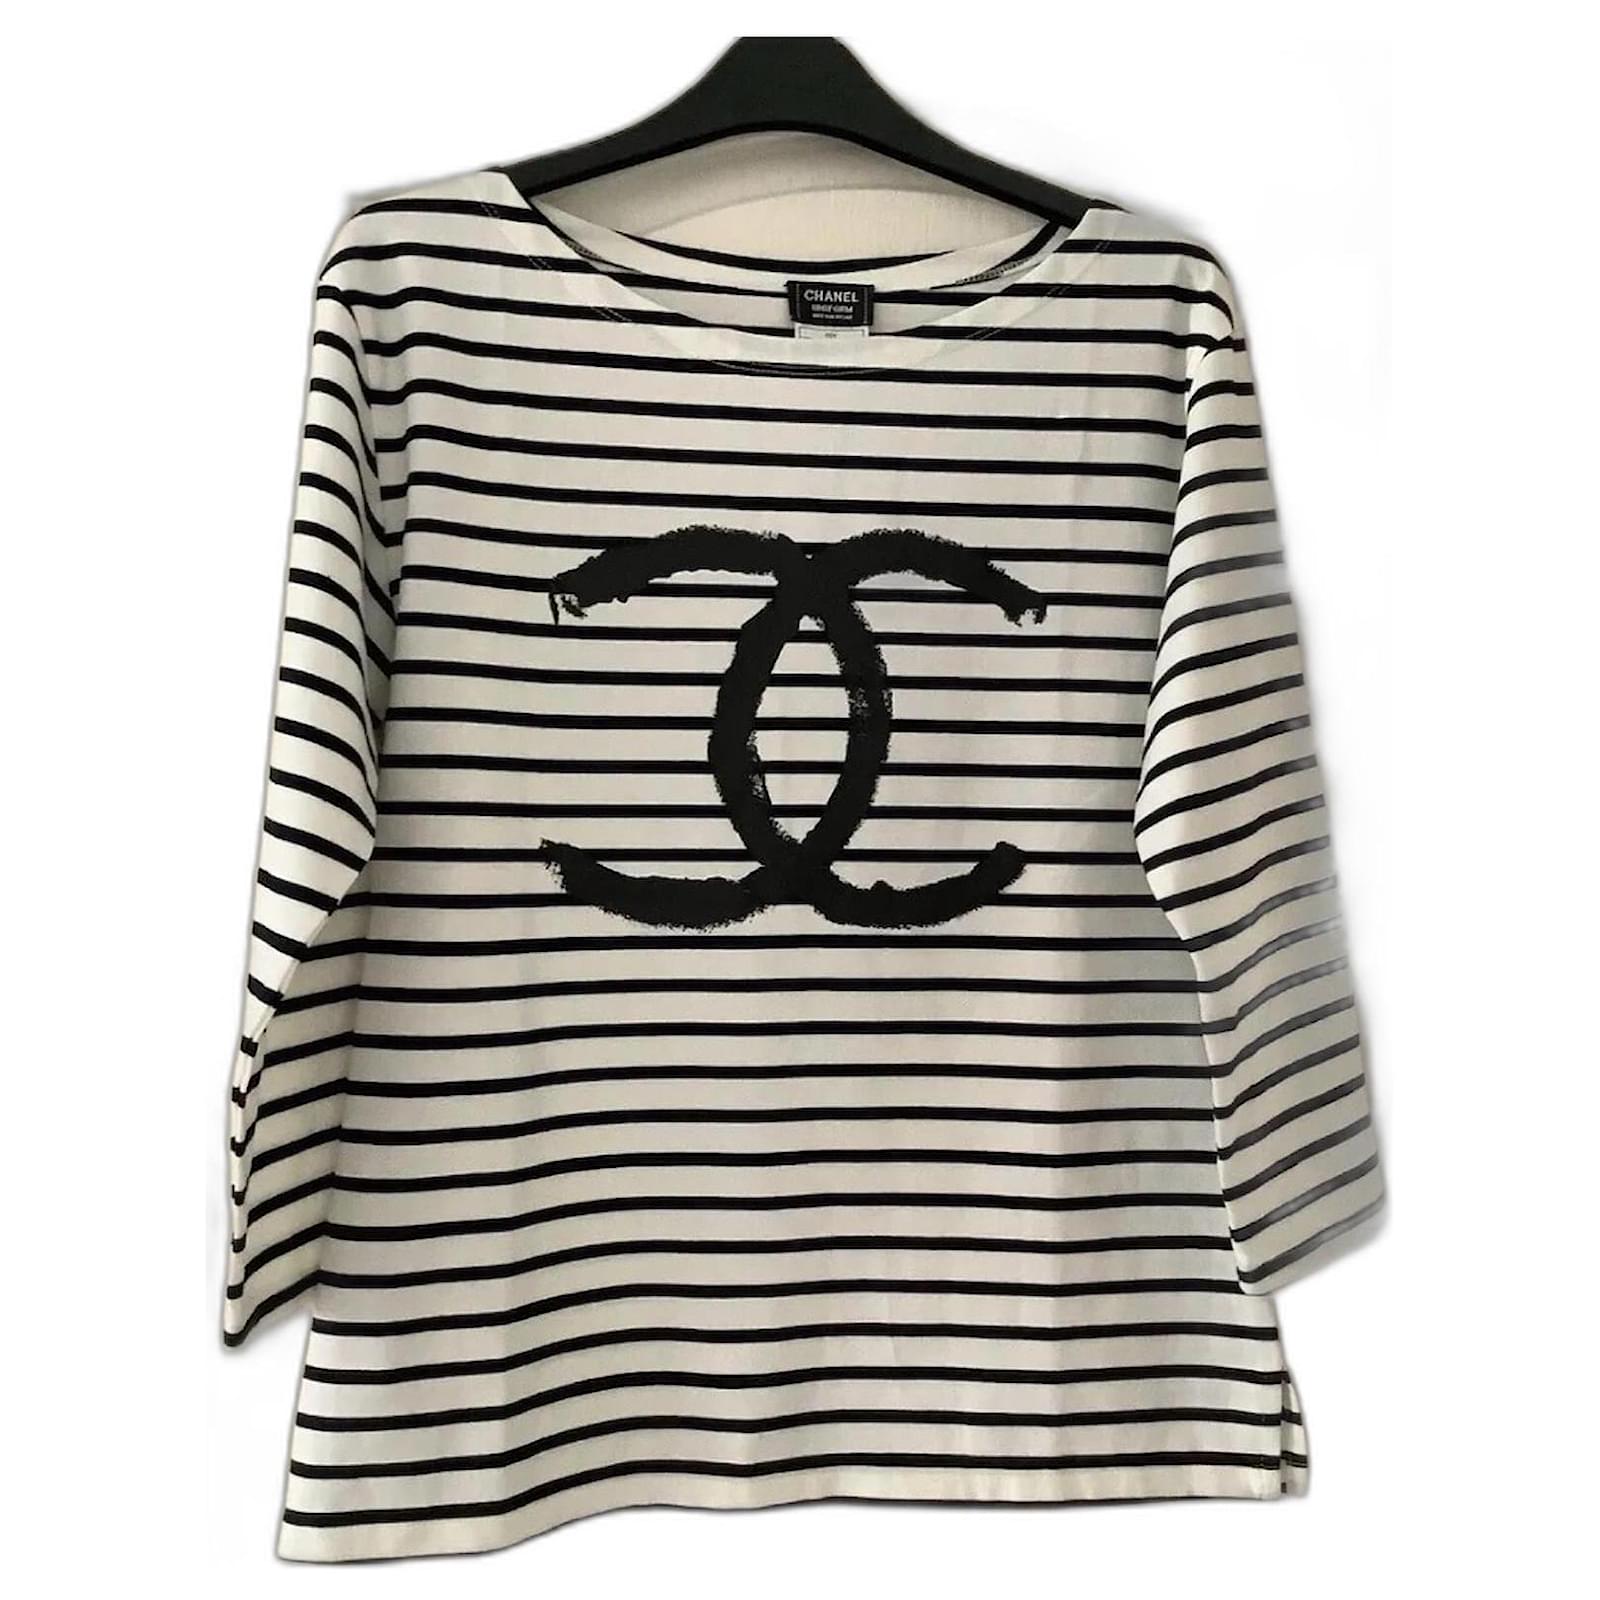 Tops Chanel Chanel CC Logo Uniform Top Size S/M **VERY Rare & Brand New***